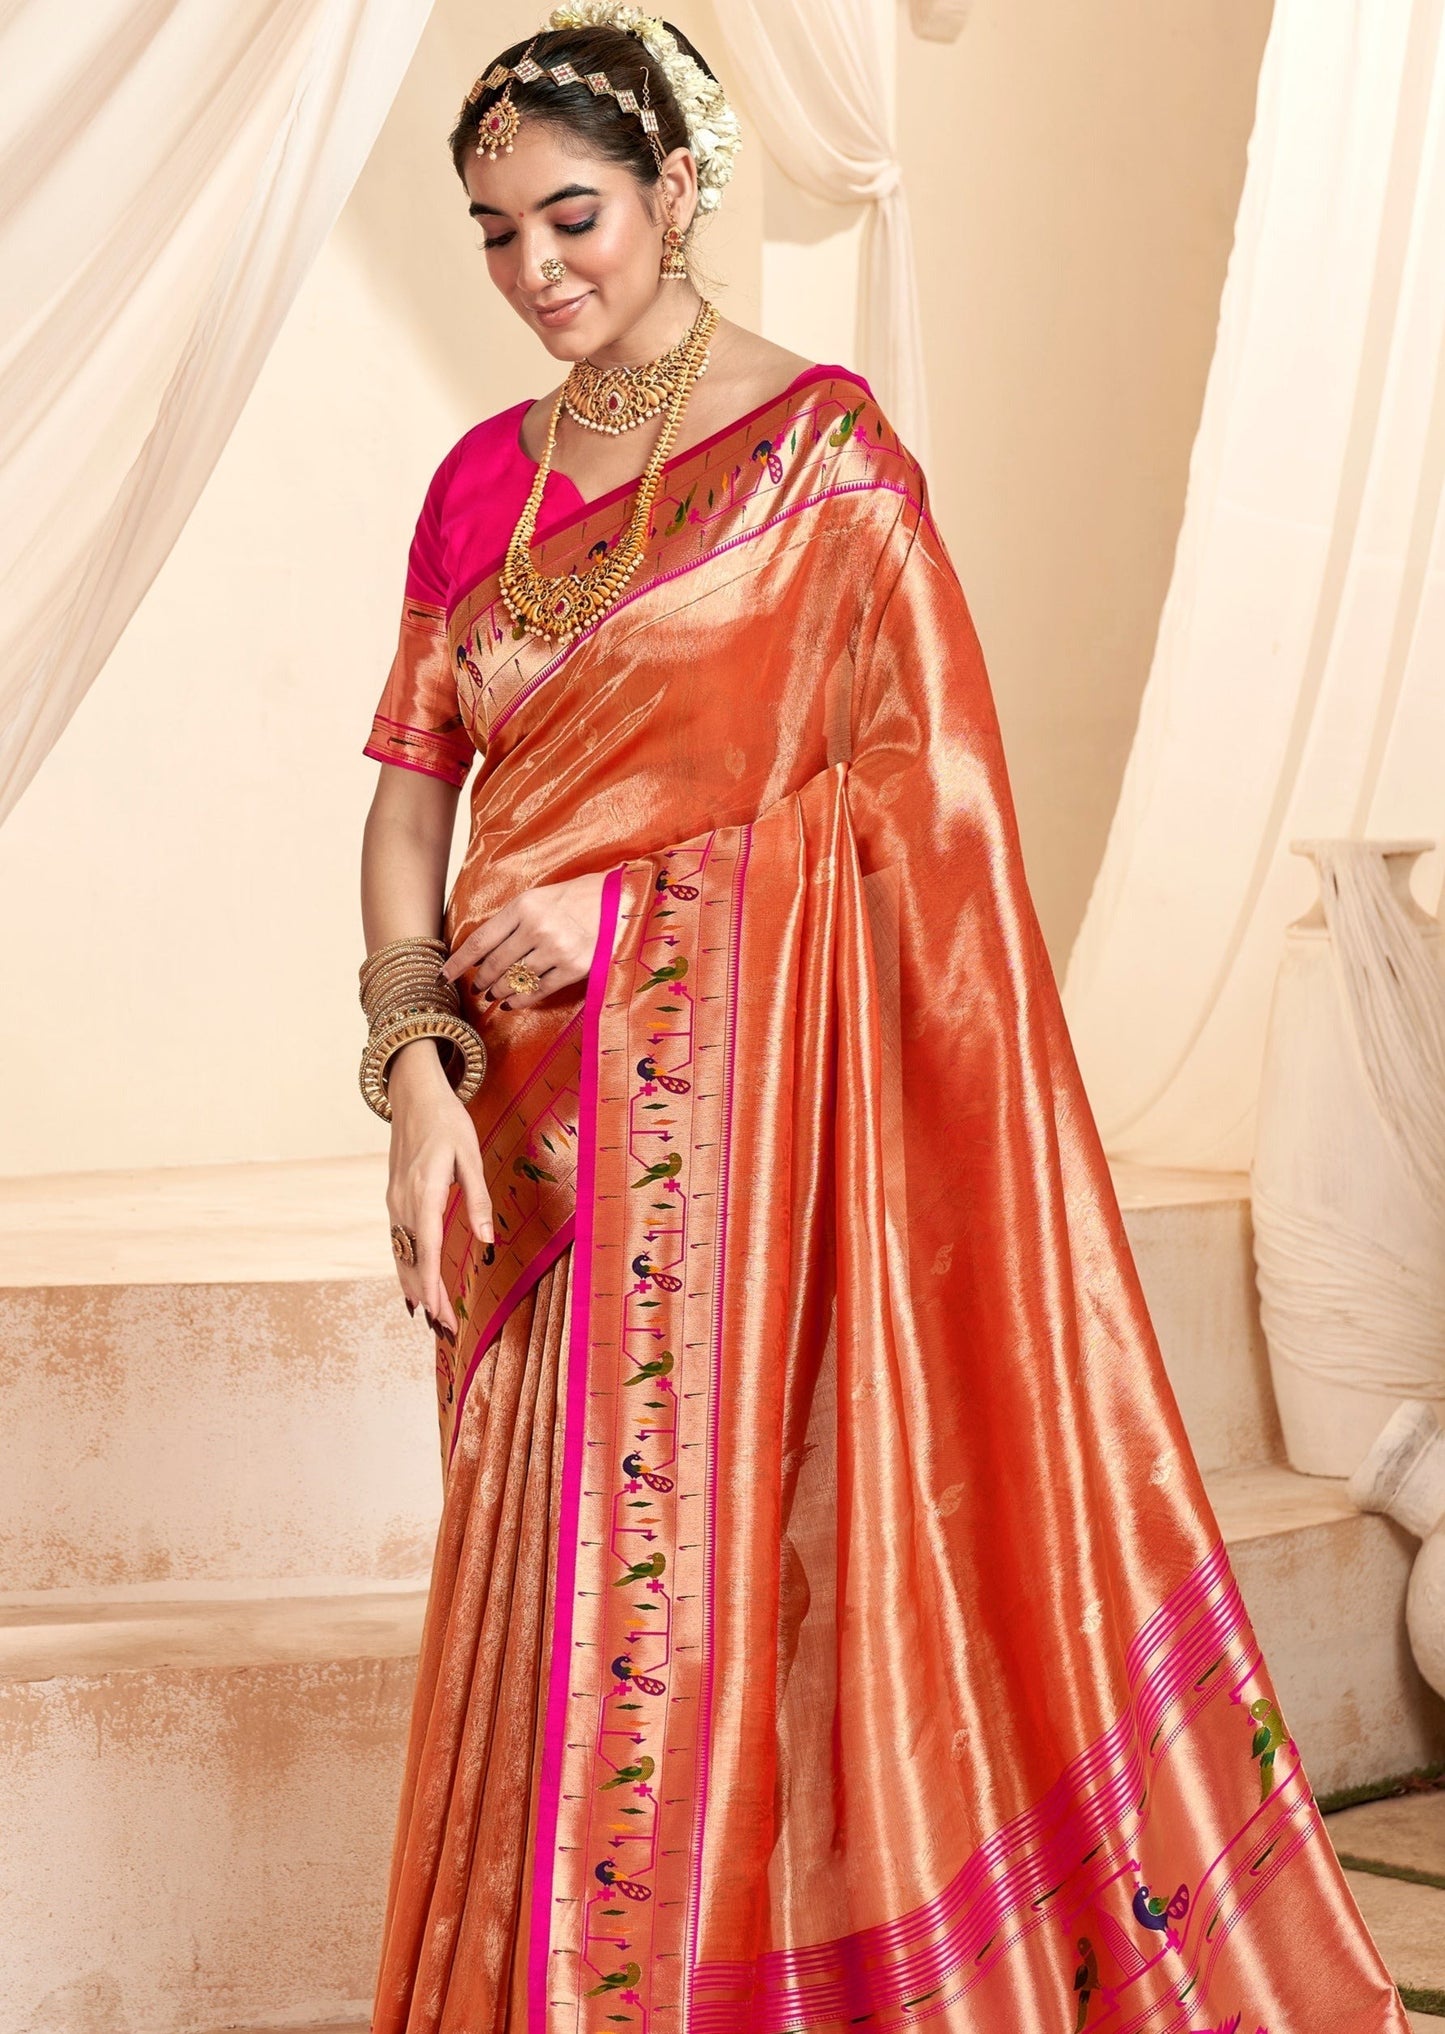 Handloom paithani tissue silk peach colour saree online shopping for wedding with price.